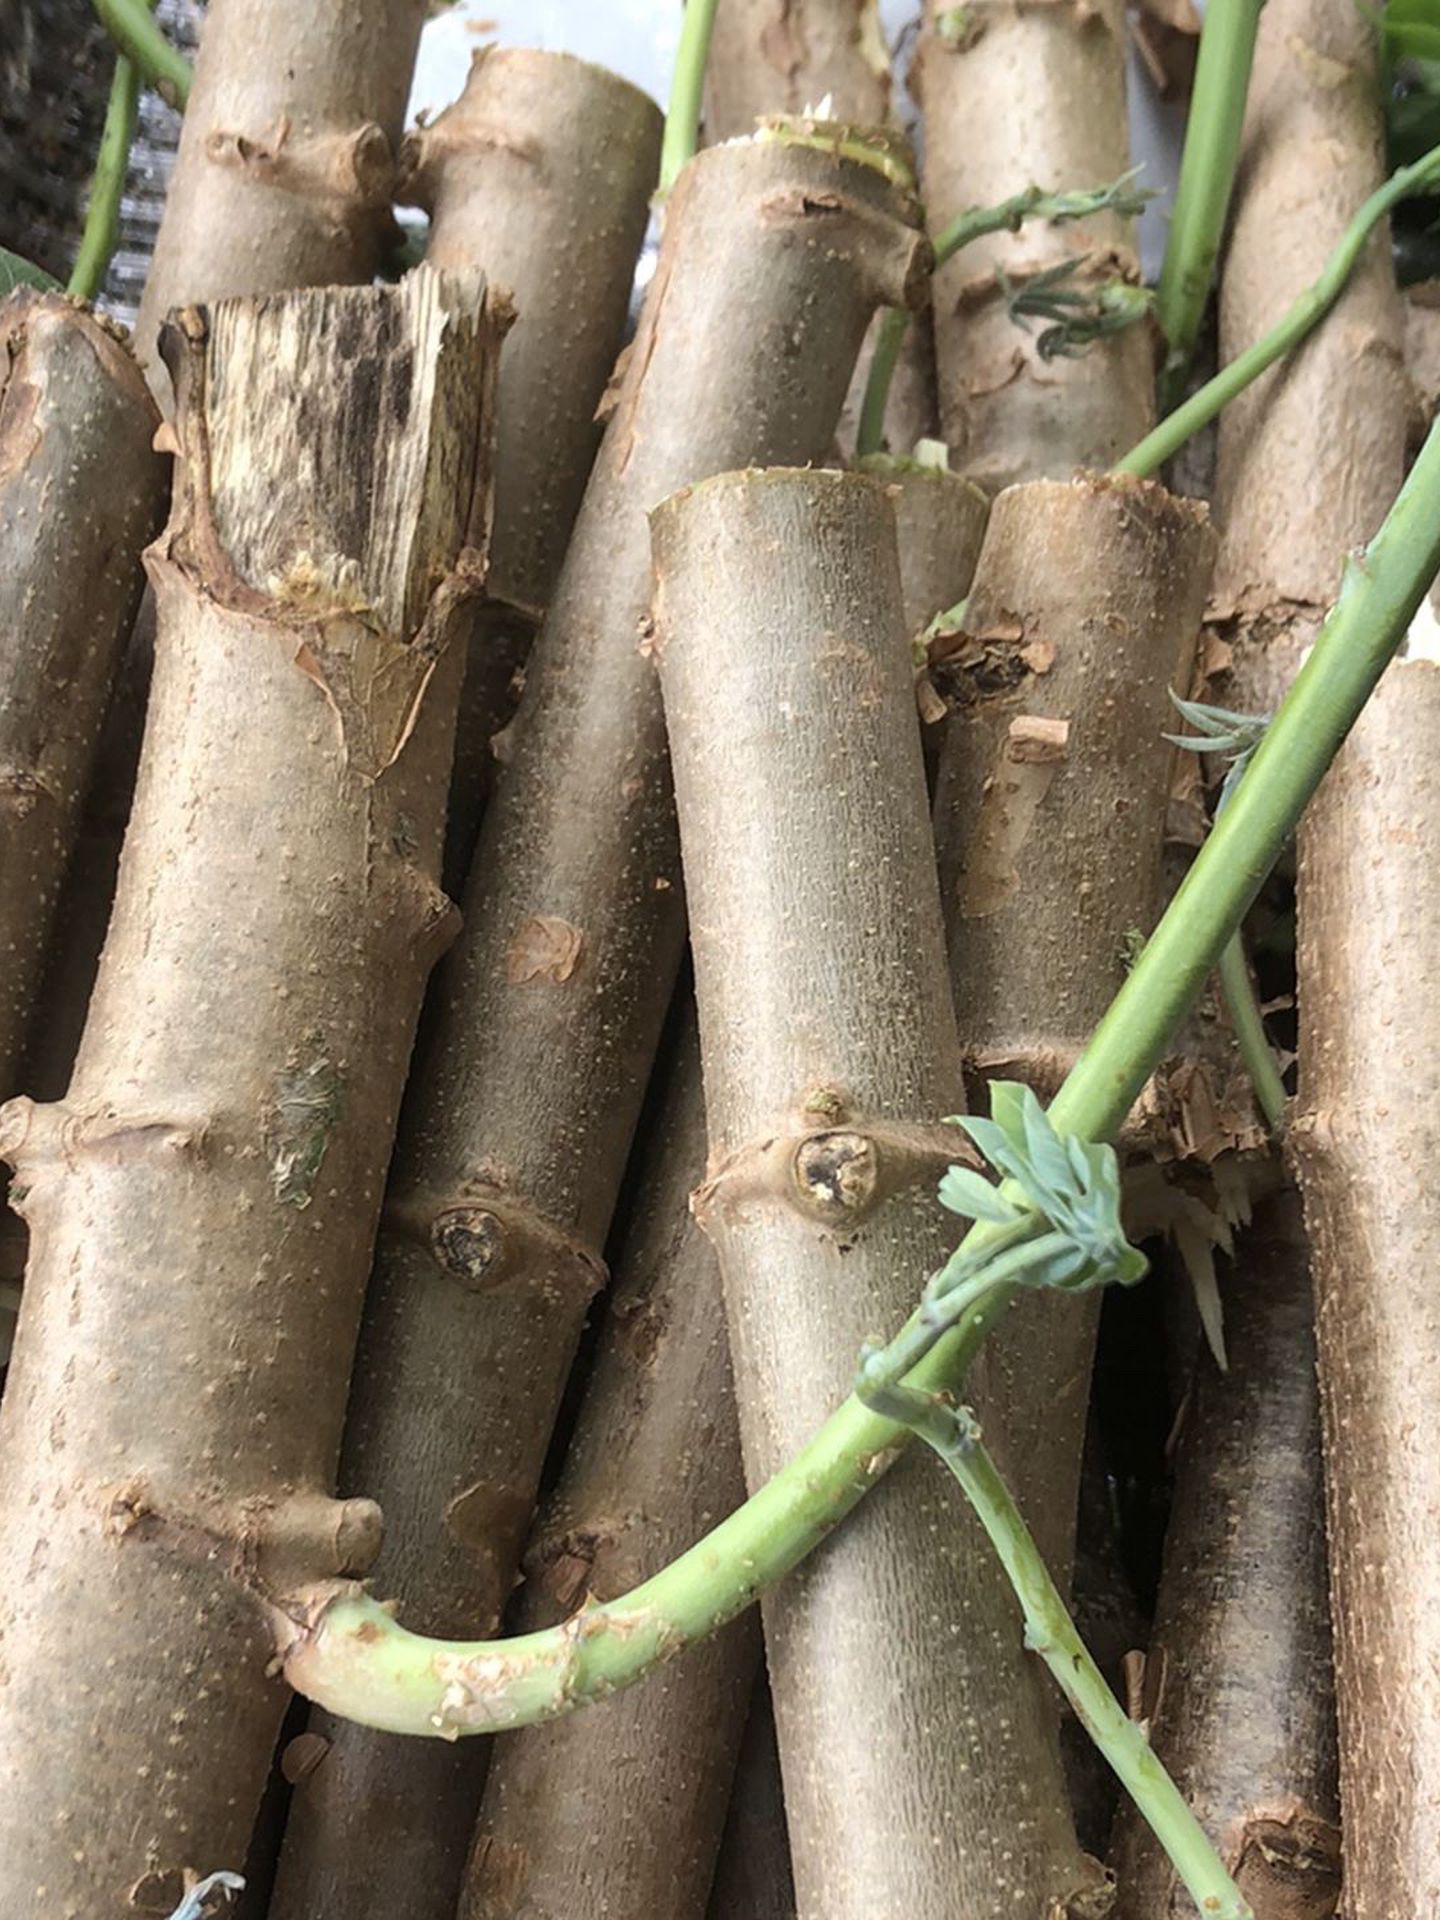 Cassava Plant